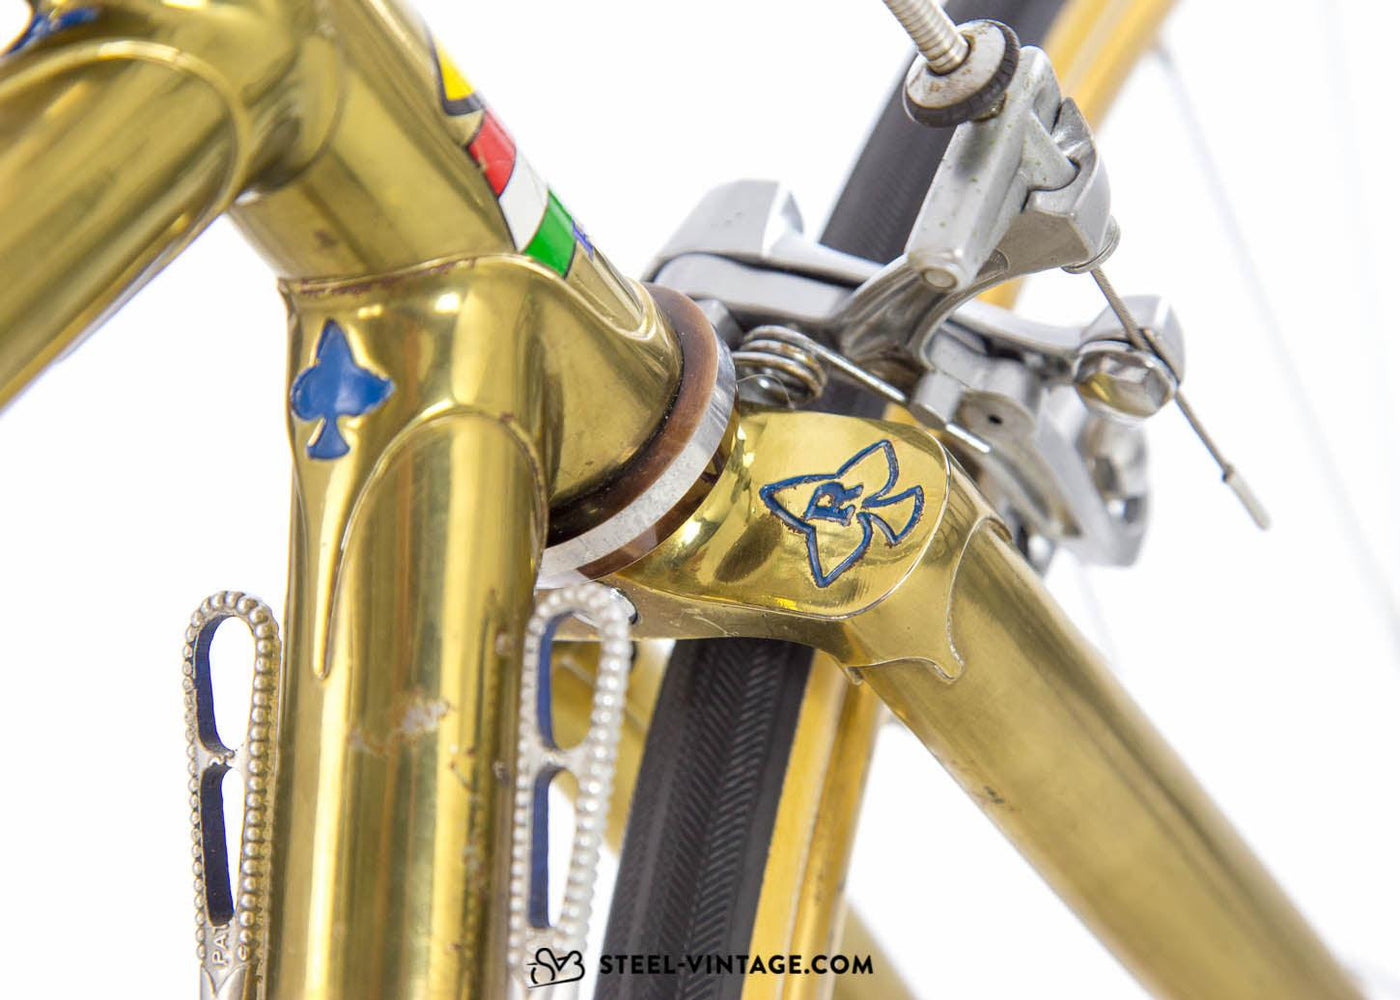 Rauler Special Gold Plated Lightweight 1978 - Steel Vintage Bikes